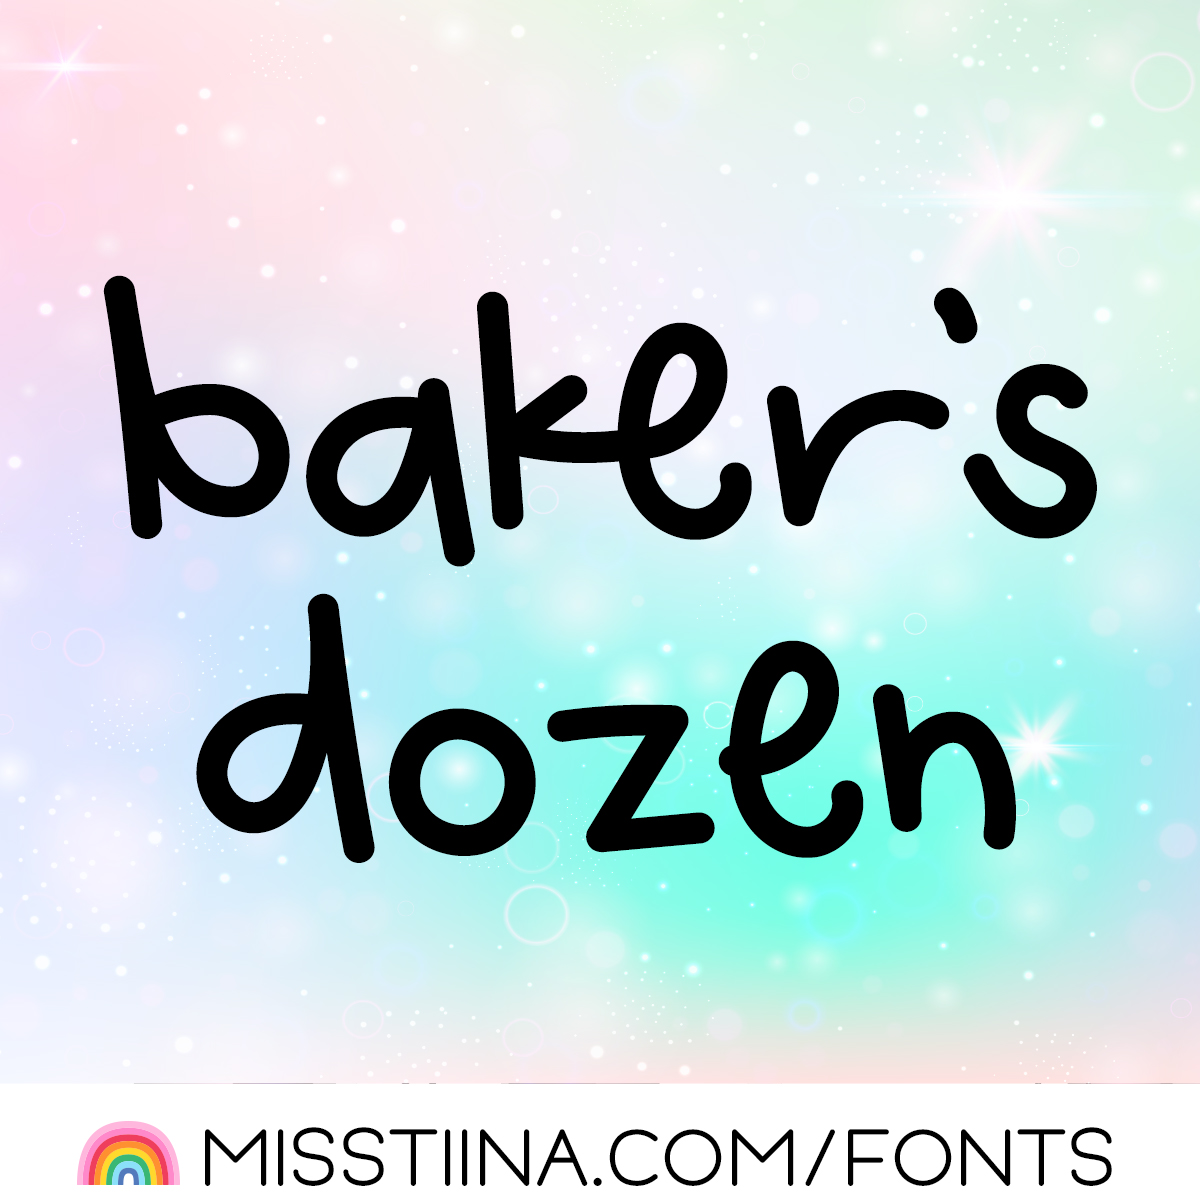 bakers dozen